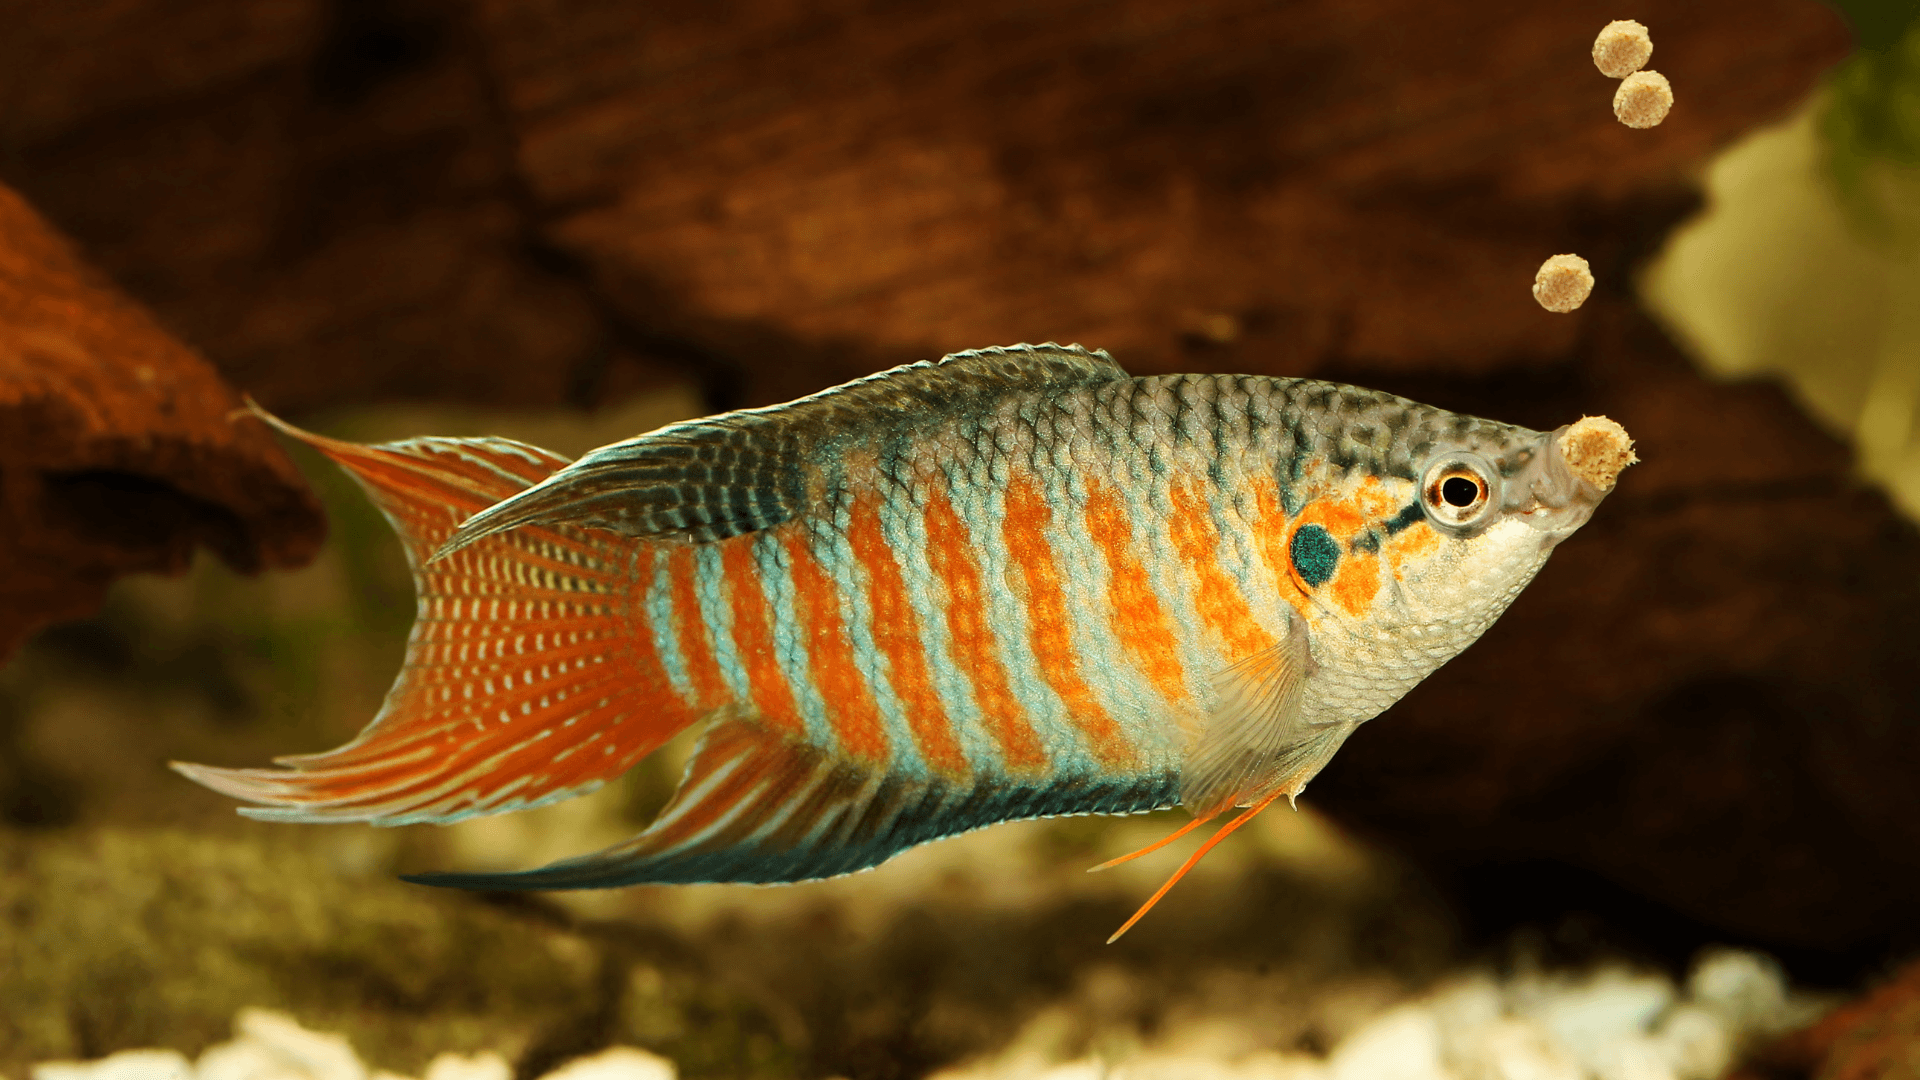 A photo of Paradise fish